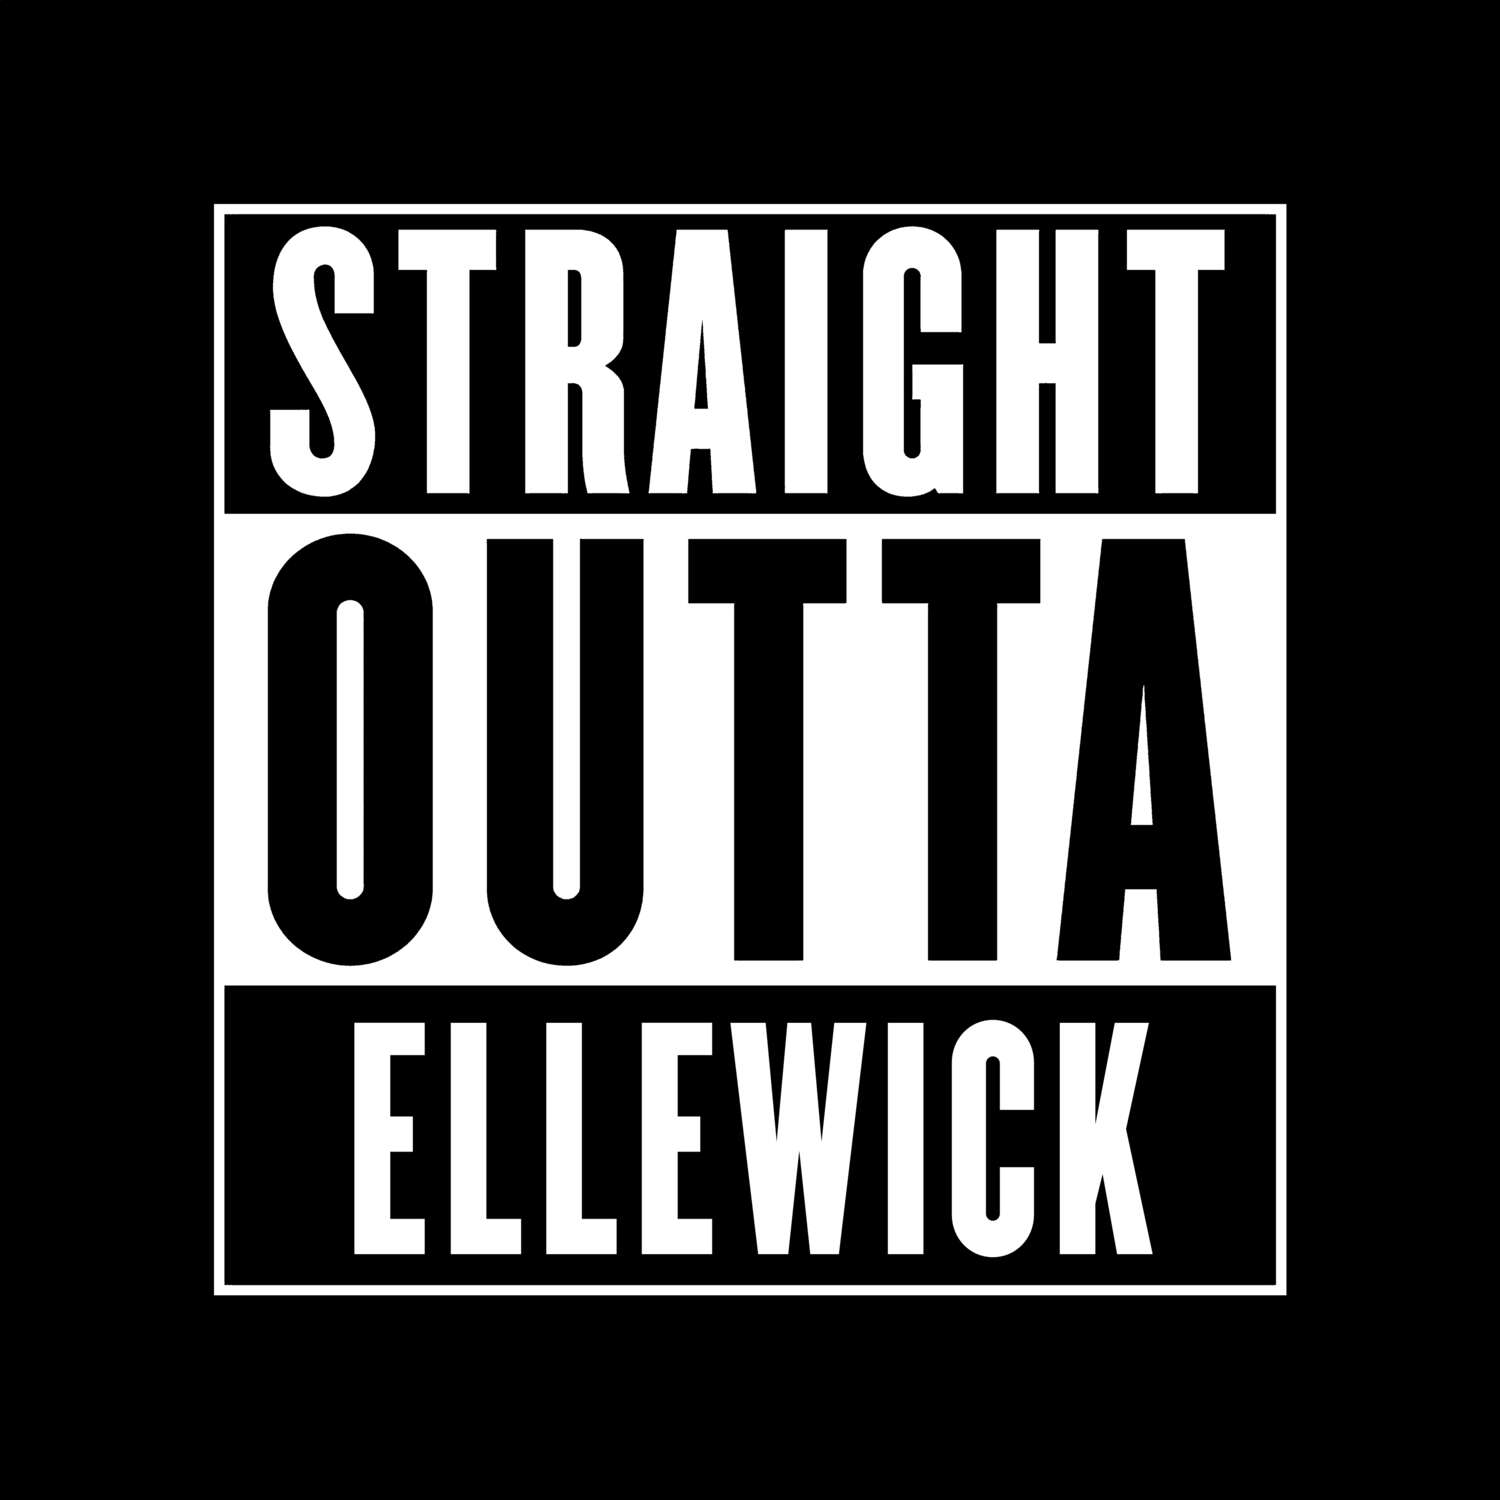 Ellewick T-Shirt »Straight Outta«